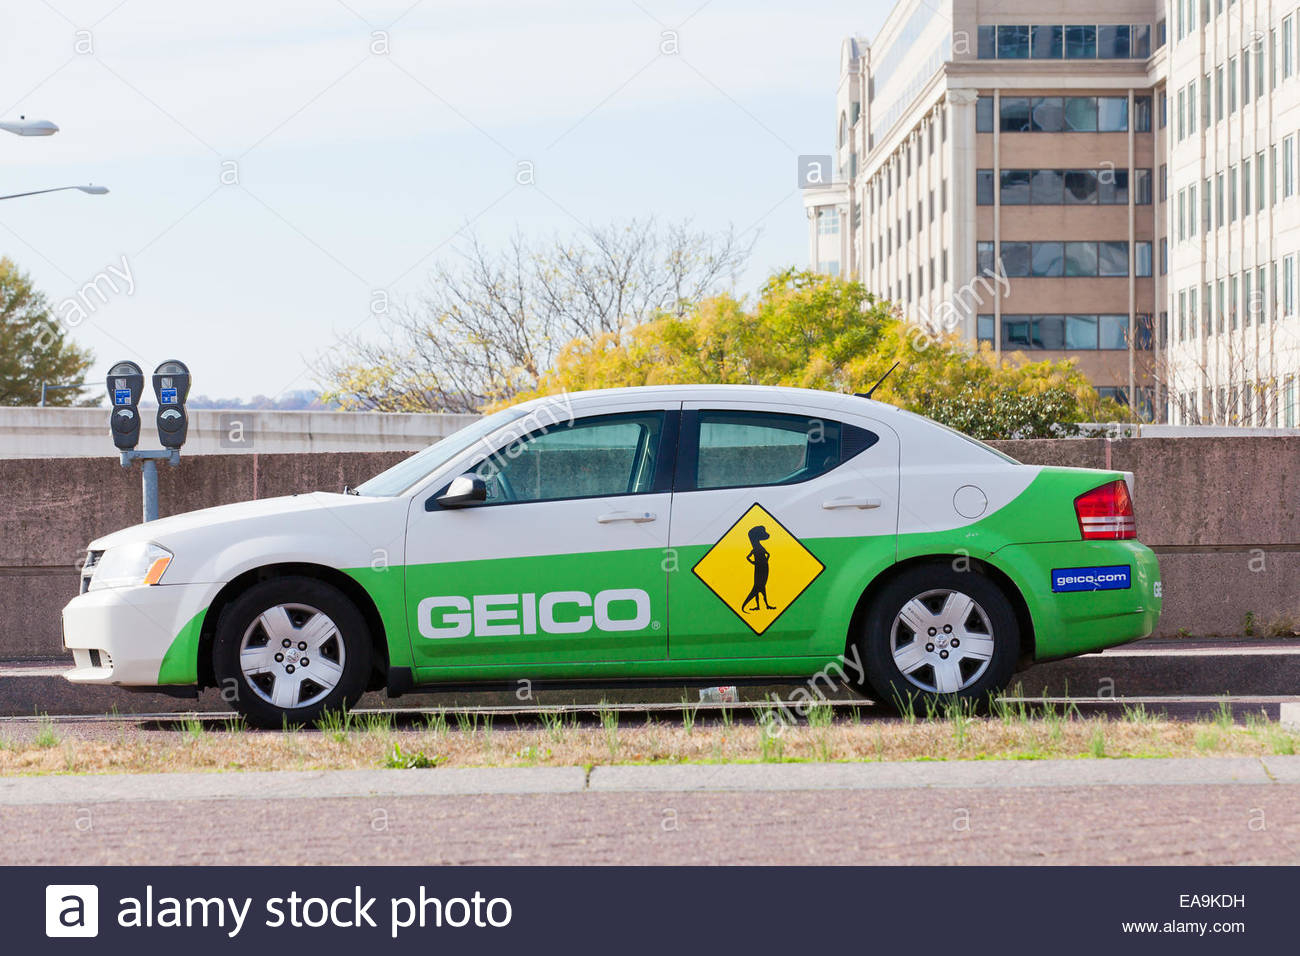 Geico Car Insurance Stock Photos Geico Car Insurance Stock inside proportions 1300 X 956